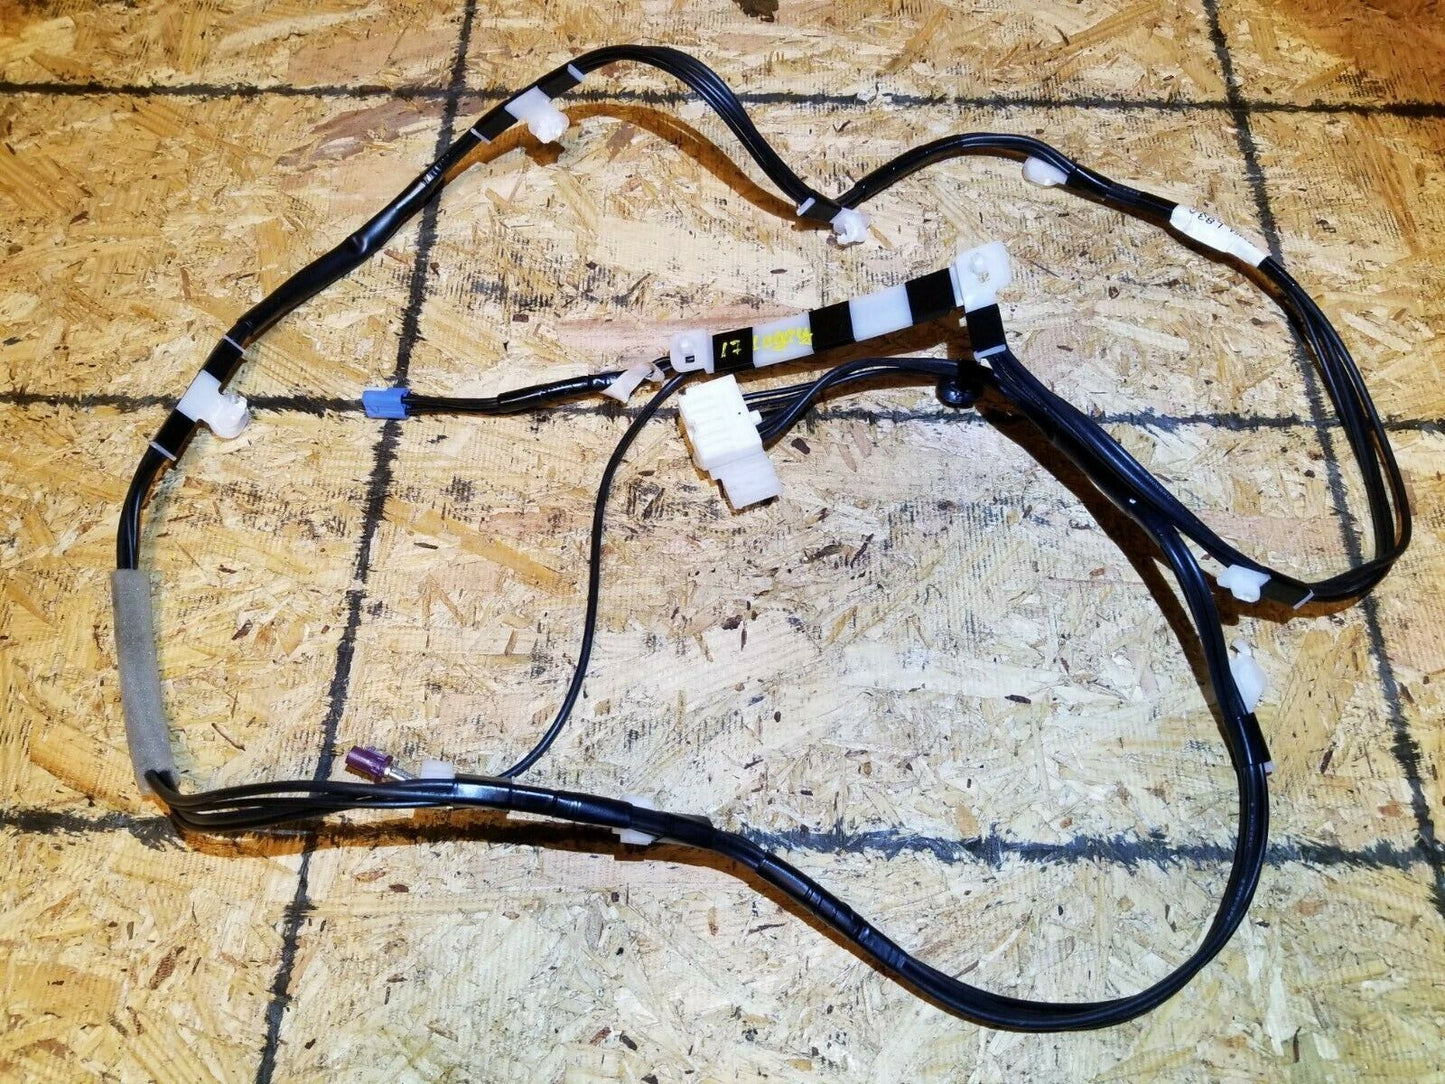 15 16 17 Subaru Legacy Feeder Cord Antenna Cable Wire Harness 86325al83a OEM 10k